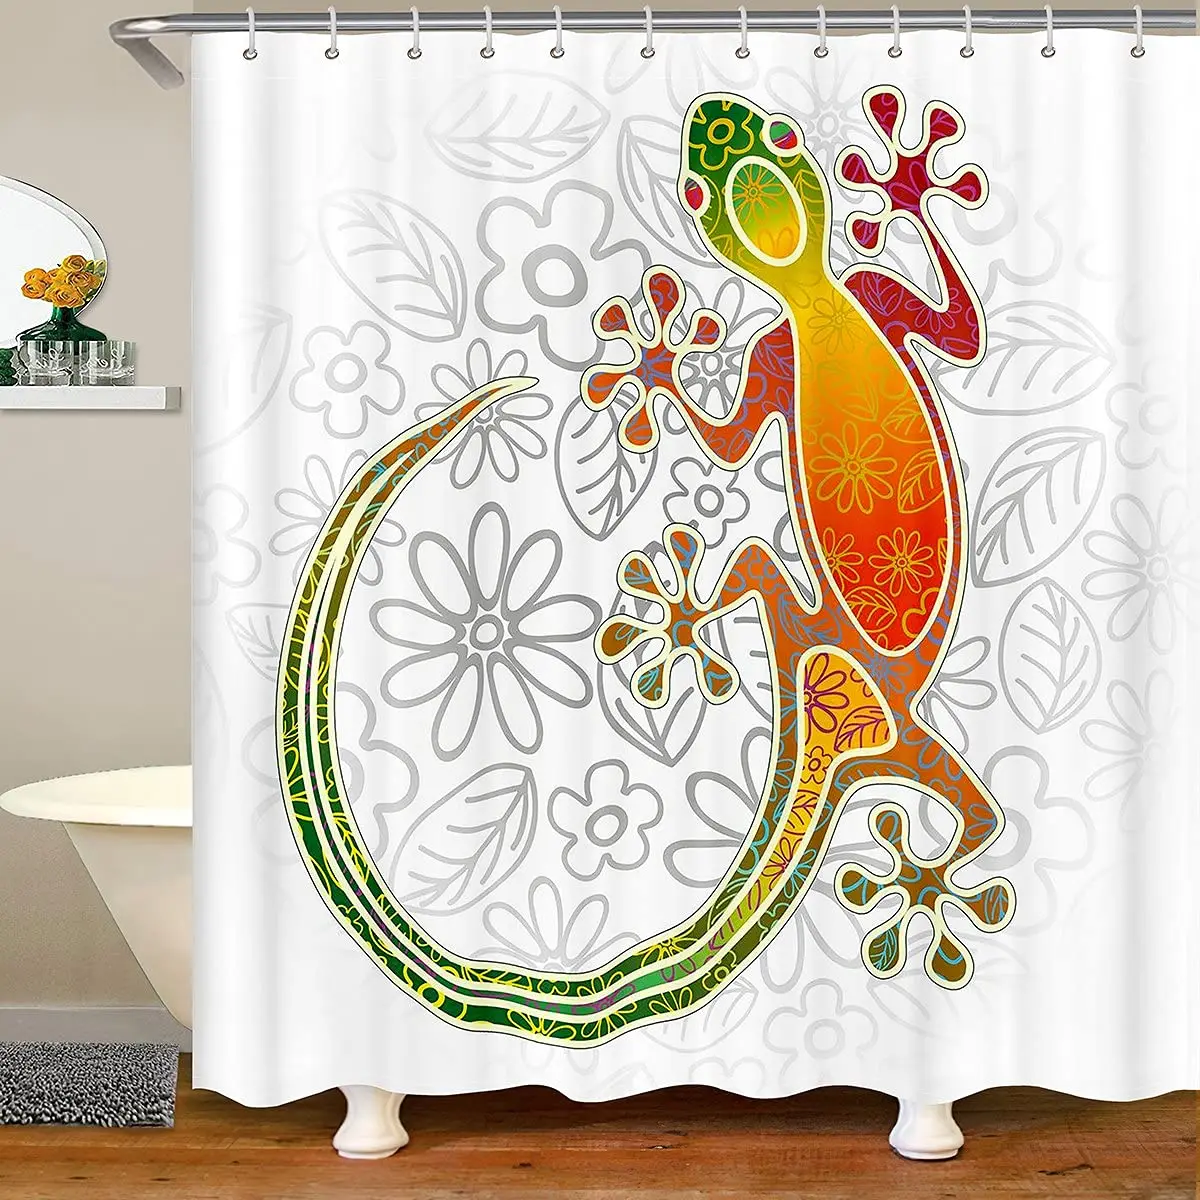 

Gecko Shower Curtain,Lizard Sunflower Bathroom Curtain,Reptiles Animal Waterproof Curtains Watercolor Modern Design Bath Curtain